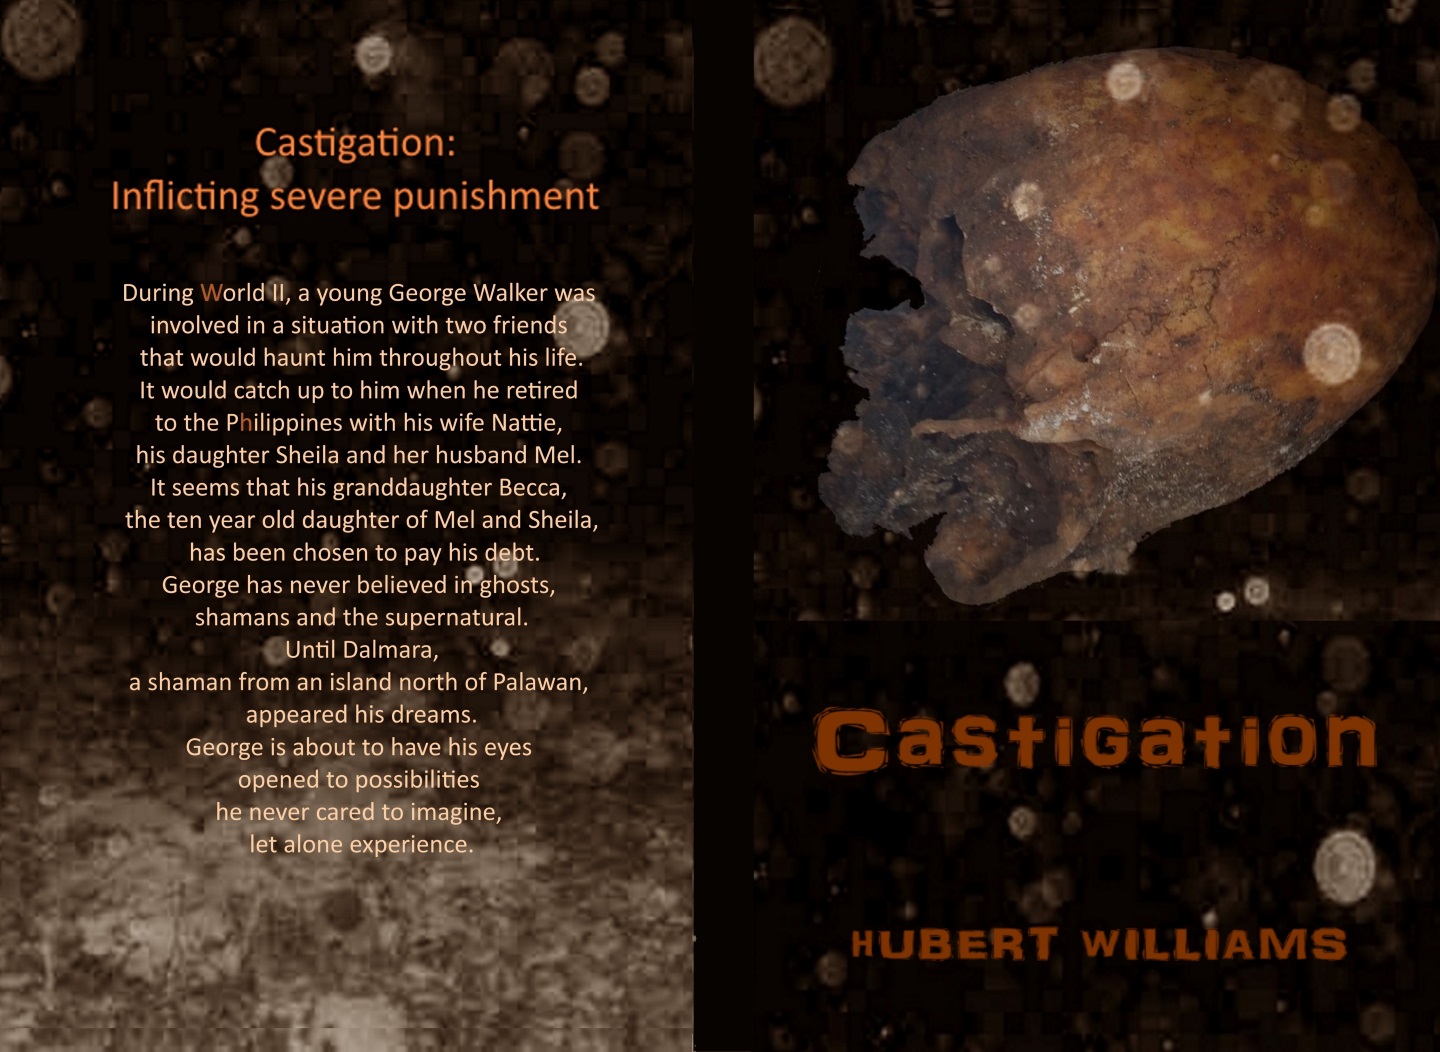 Castigation by Hubert Williams